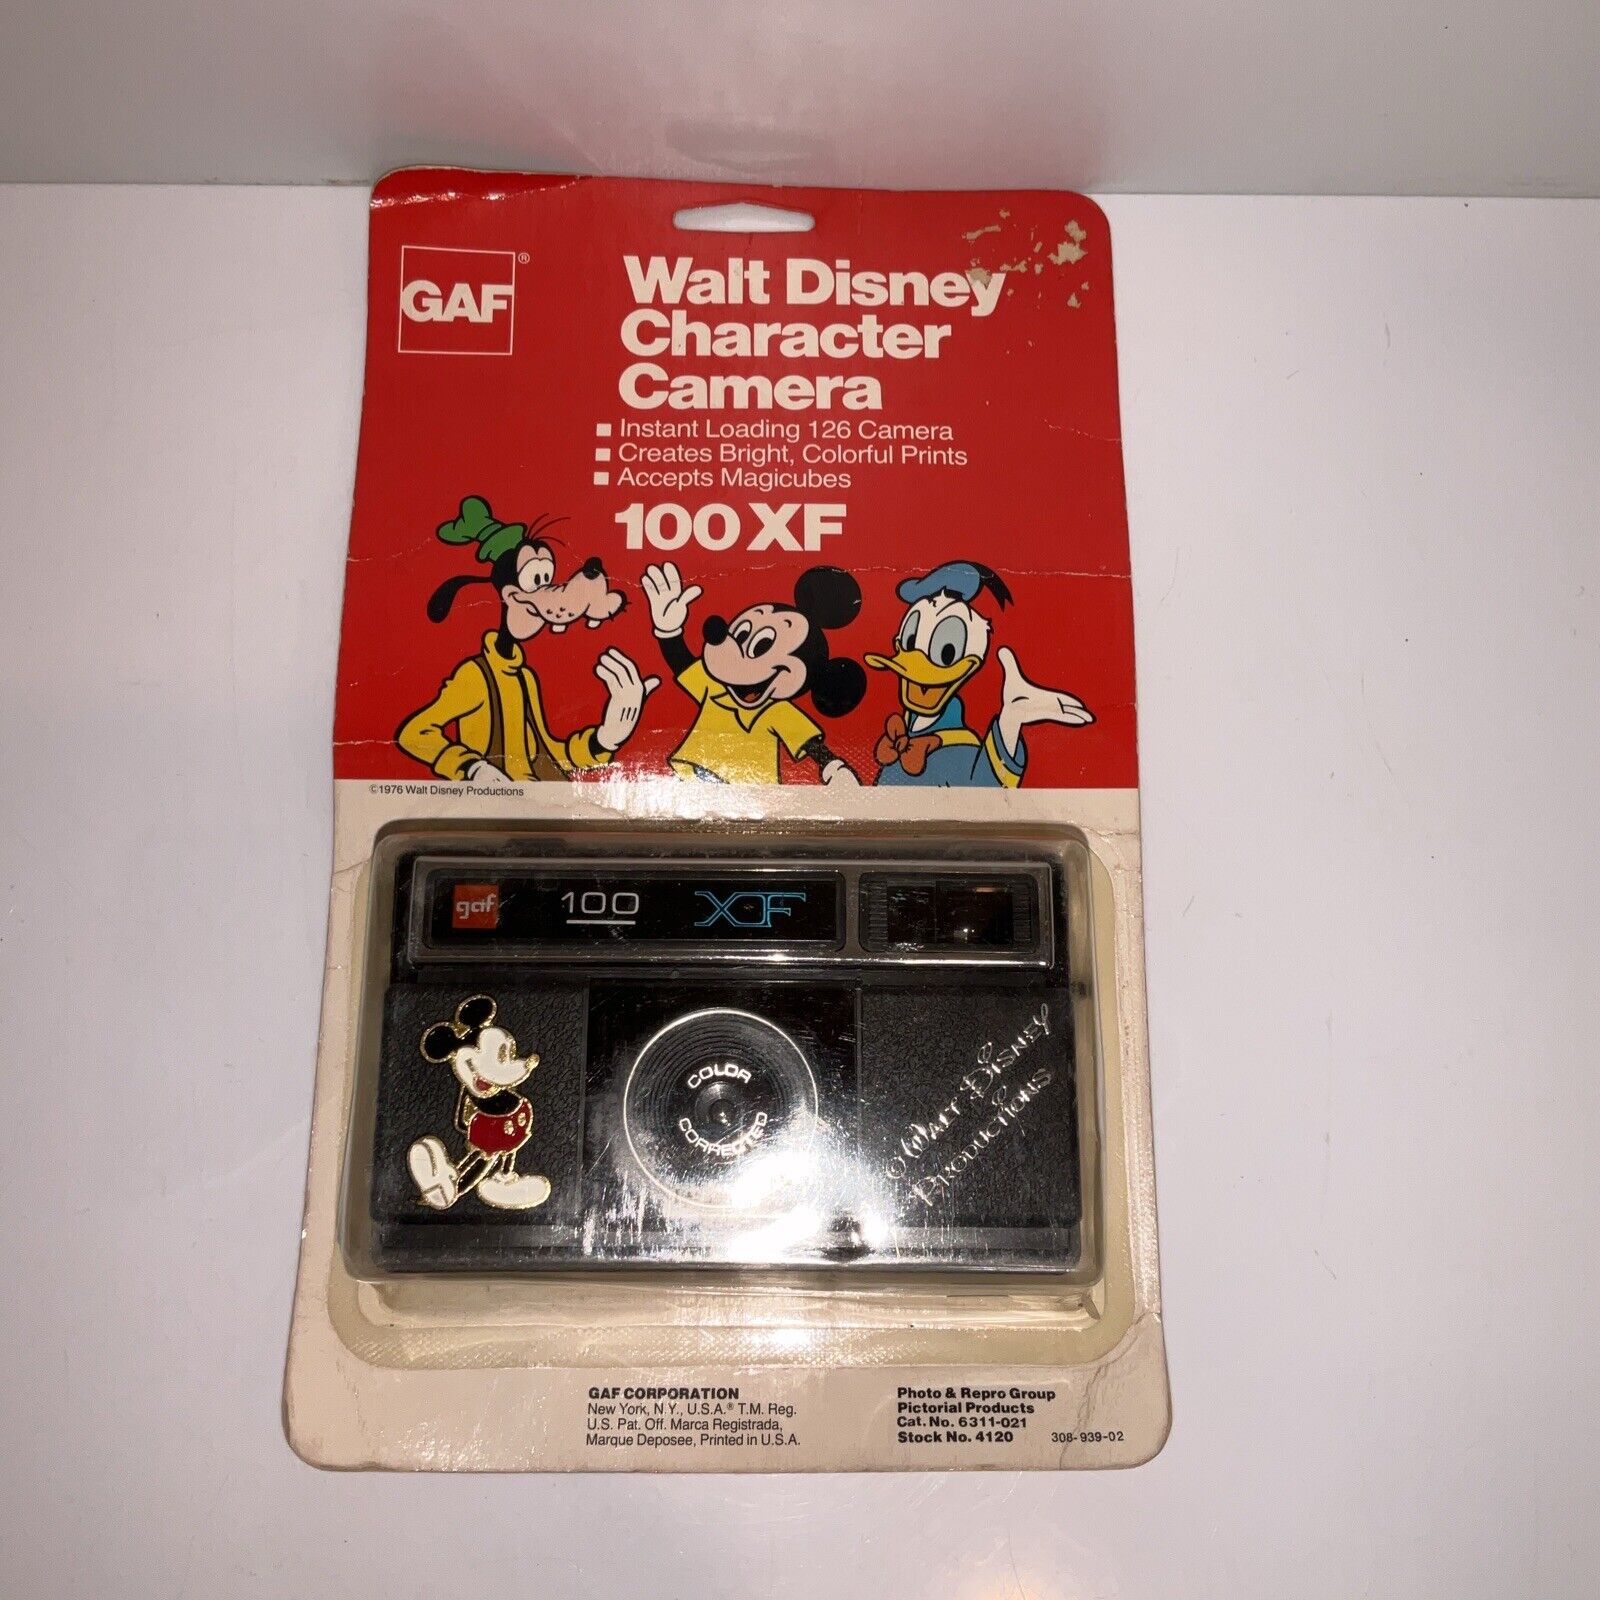 NOS 1976 Rare Walt Disney Character Camera 100 XF GAF CORPORATION Made In Macau